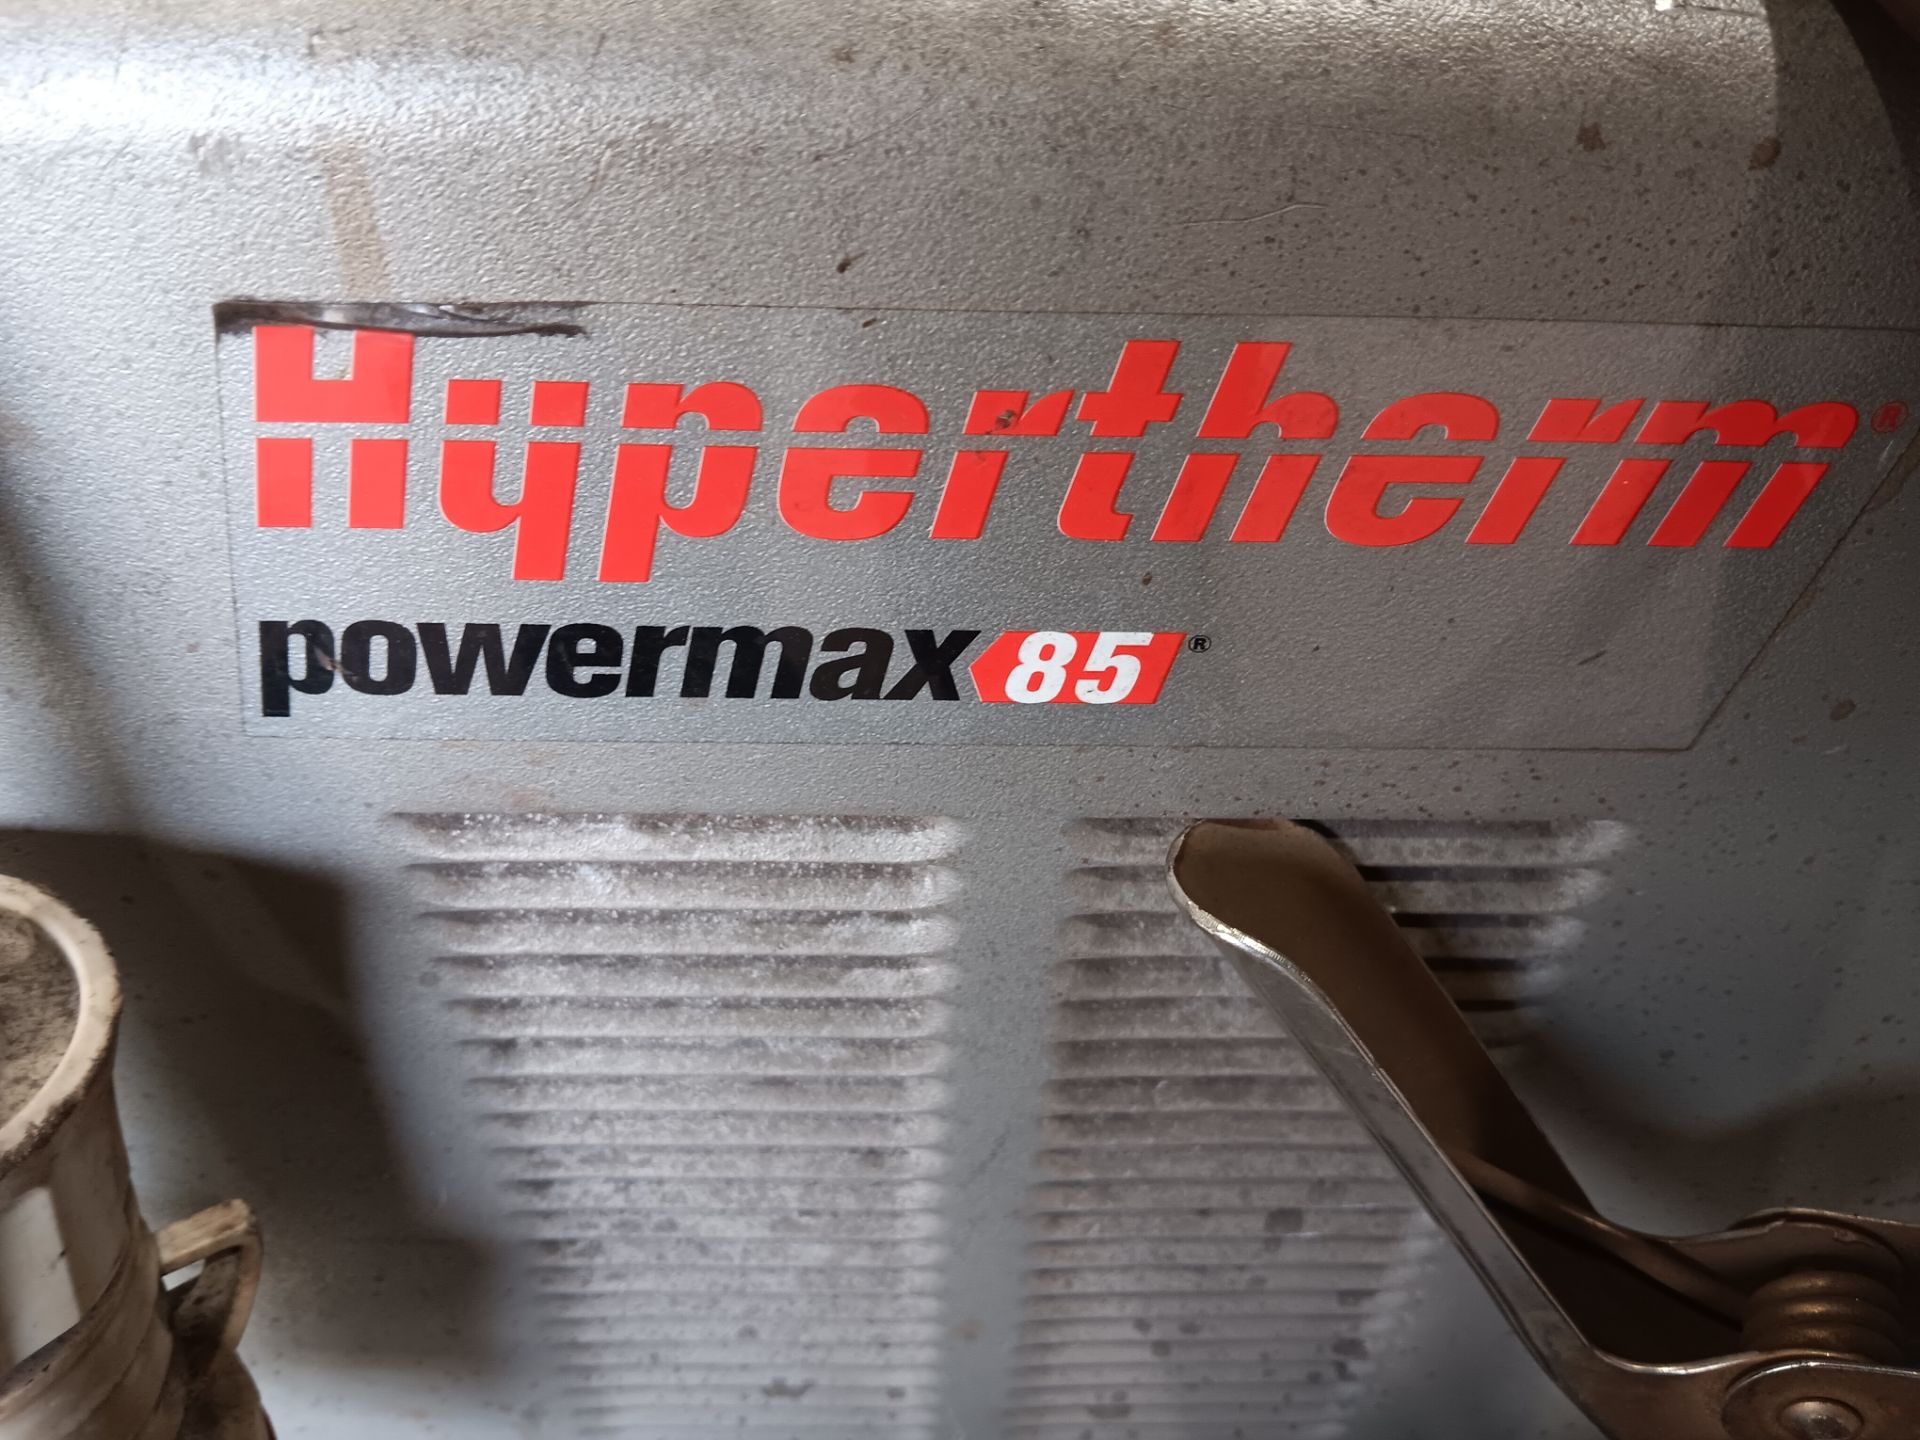 Hypertherm Powermatic 85 welding set - Image 3 of 4